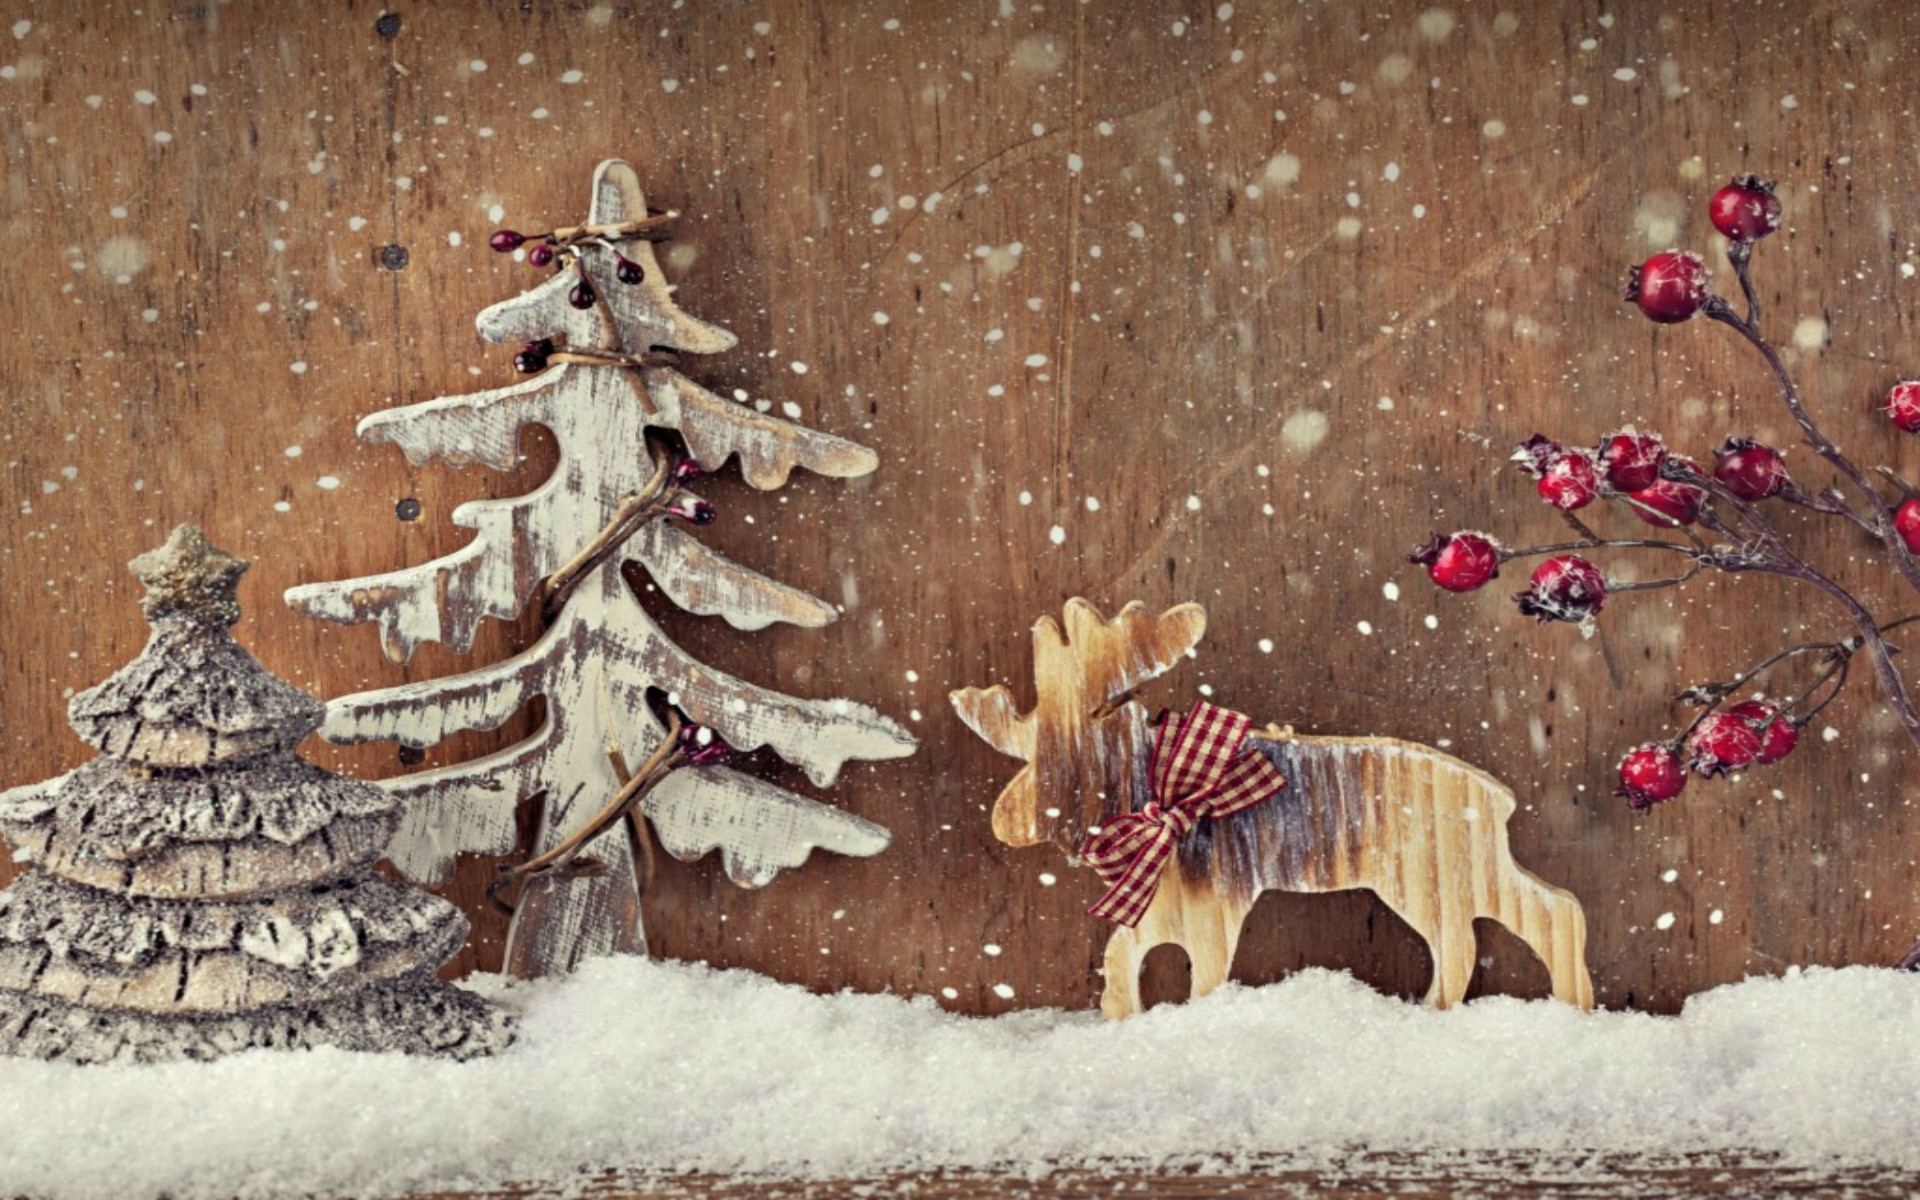 19 Hd Christmas Wallpapers & Desktop Backgrounds